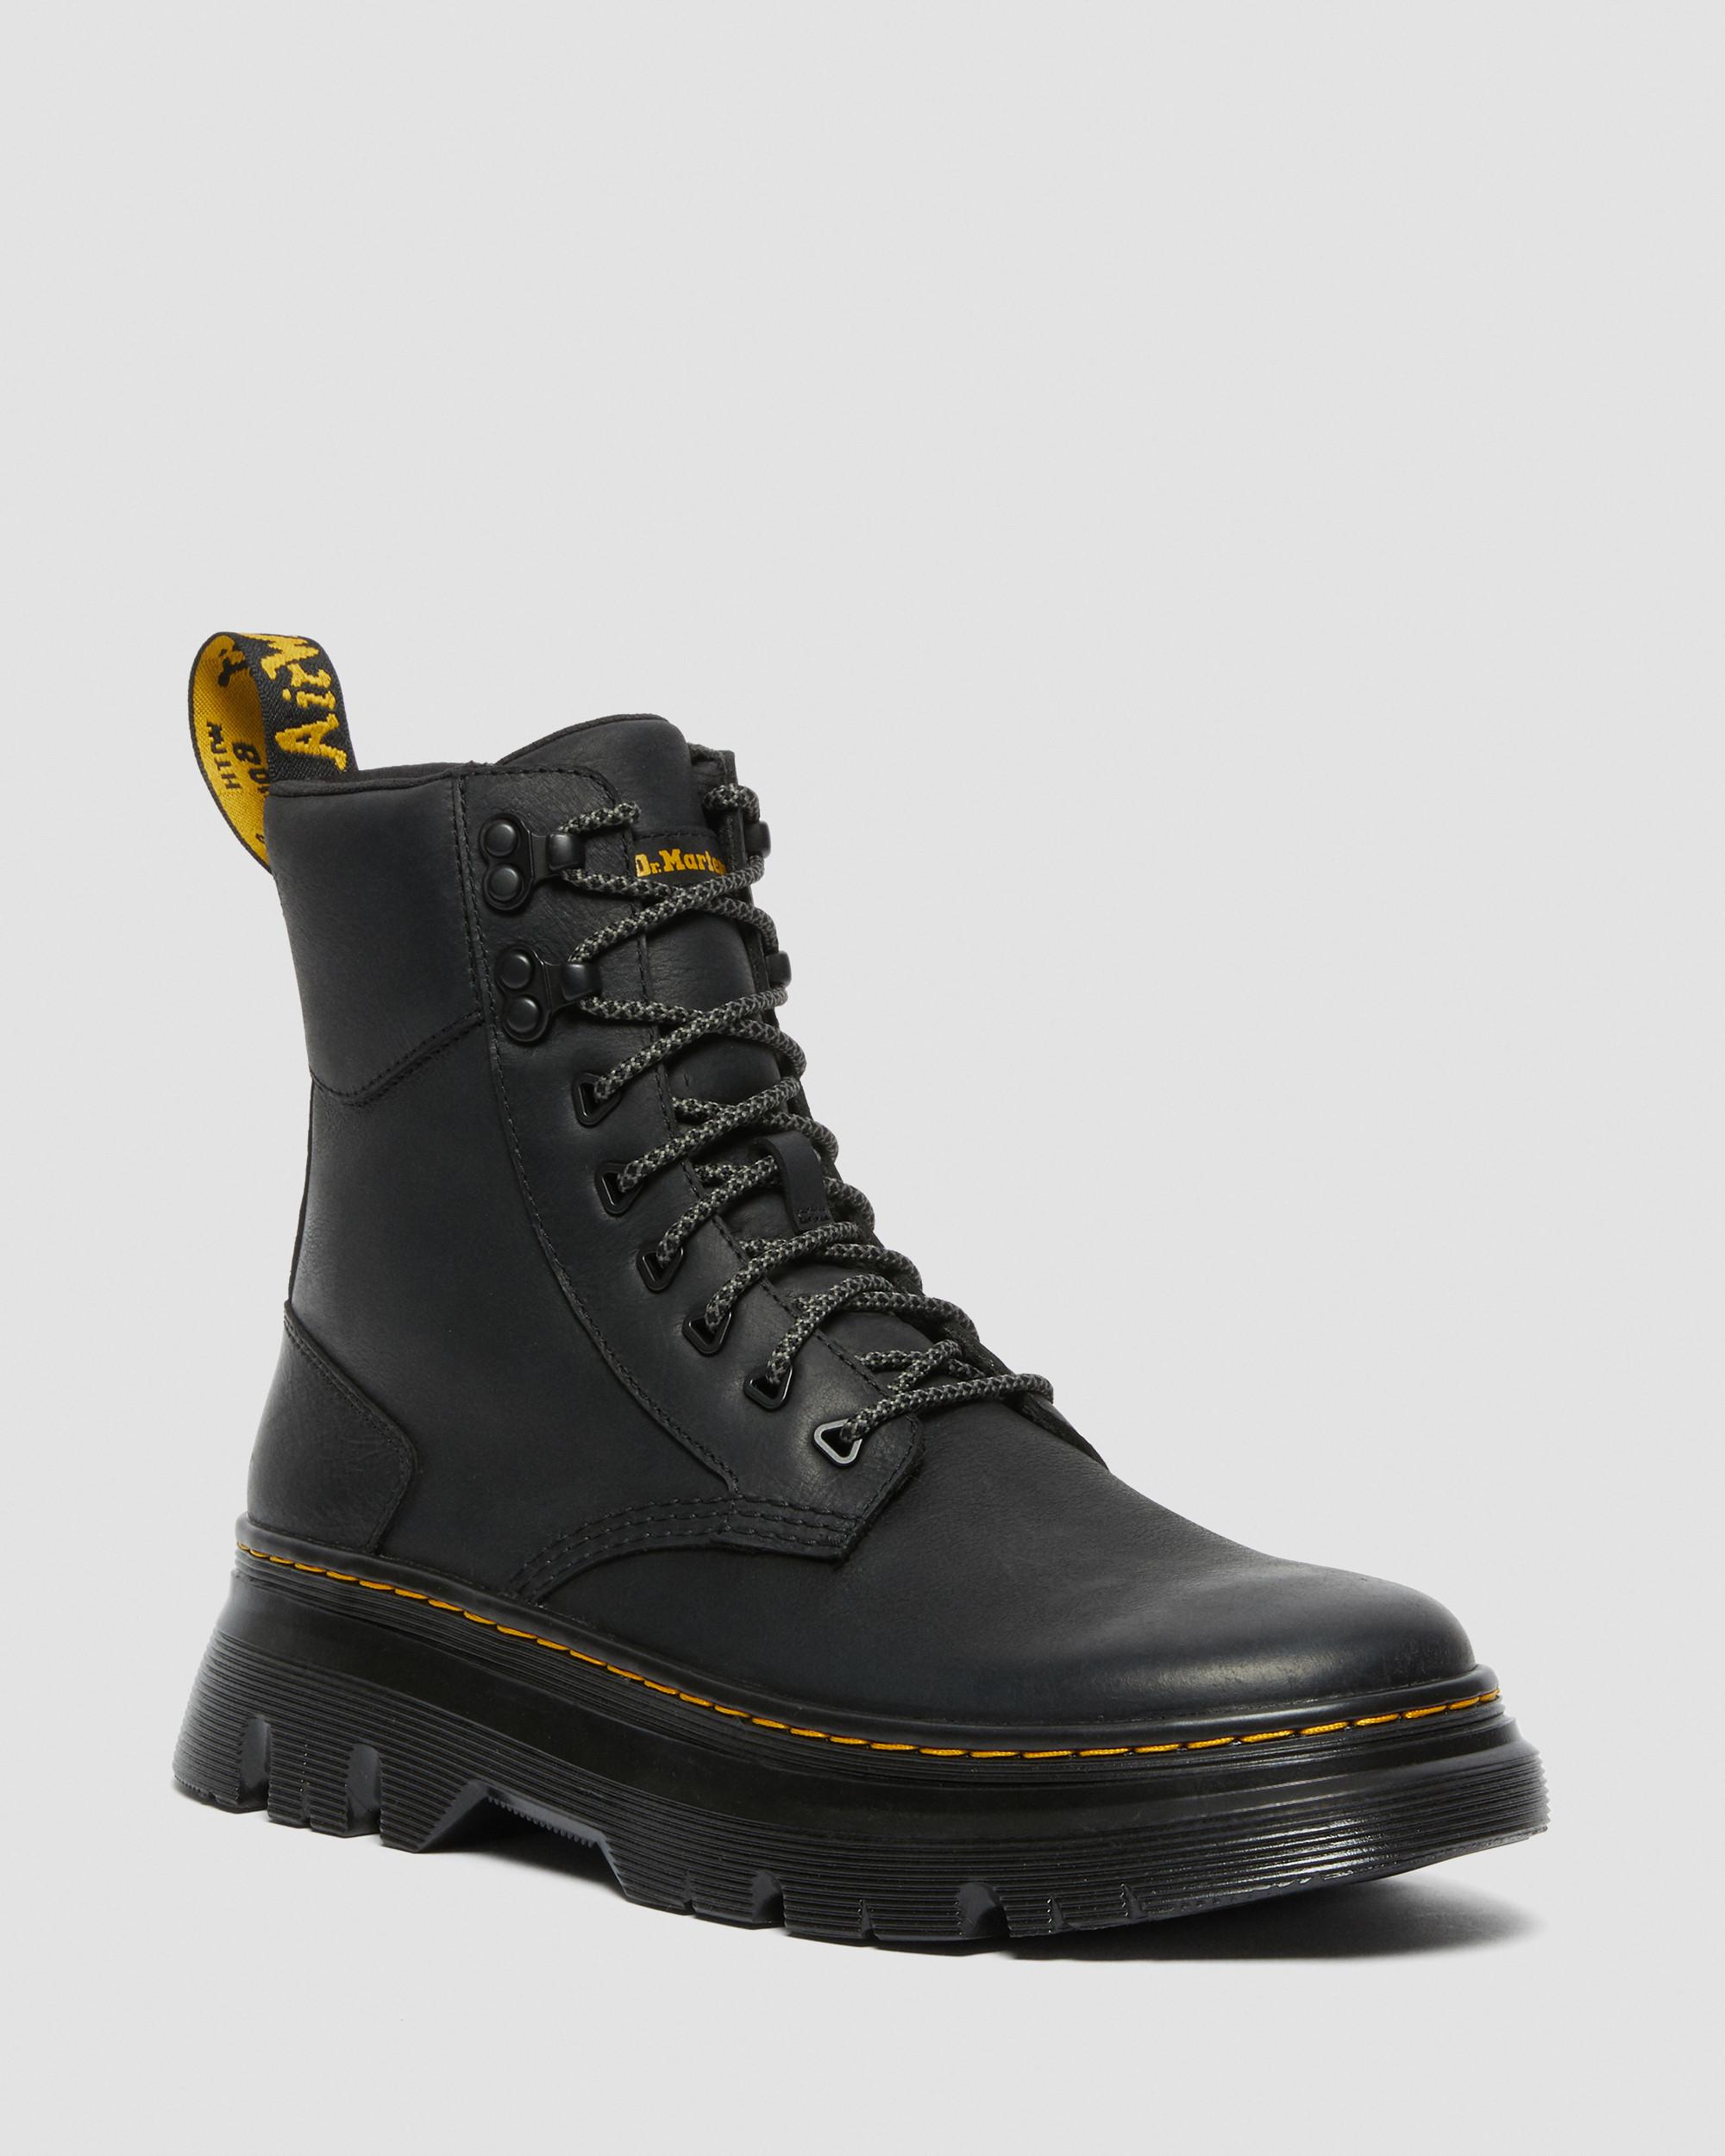 Tarik Wyoming Leather Utility Boots in Black